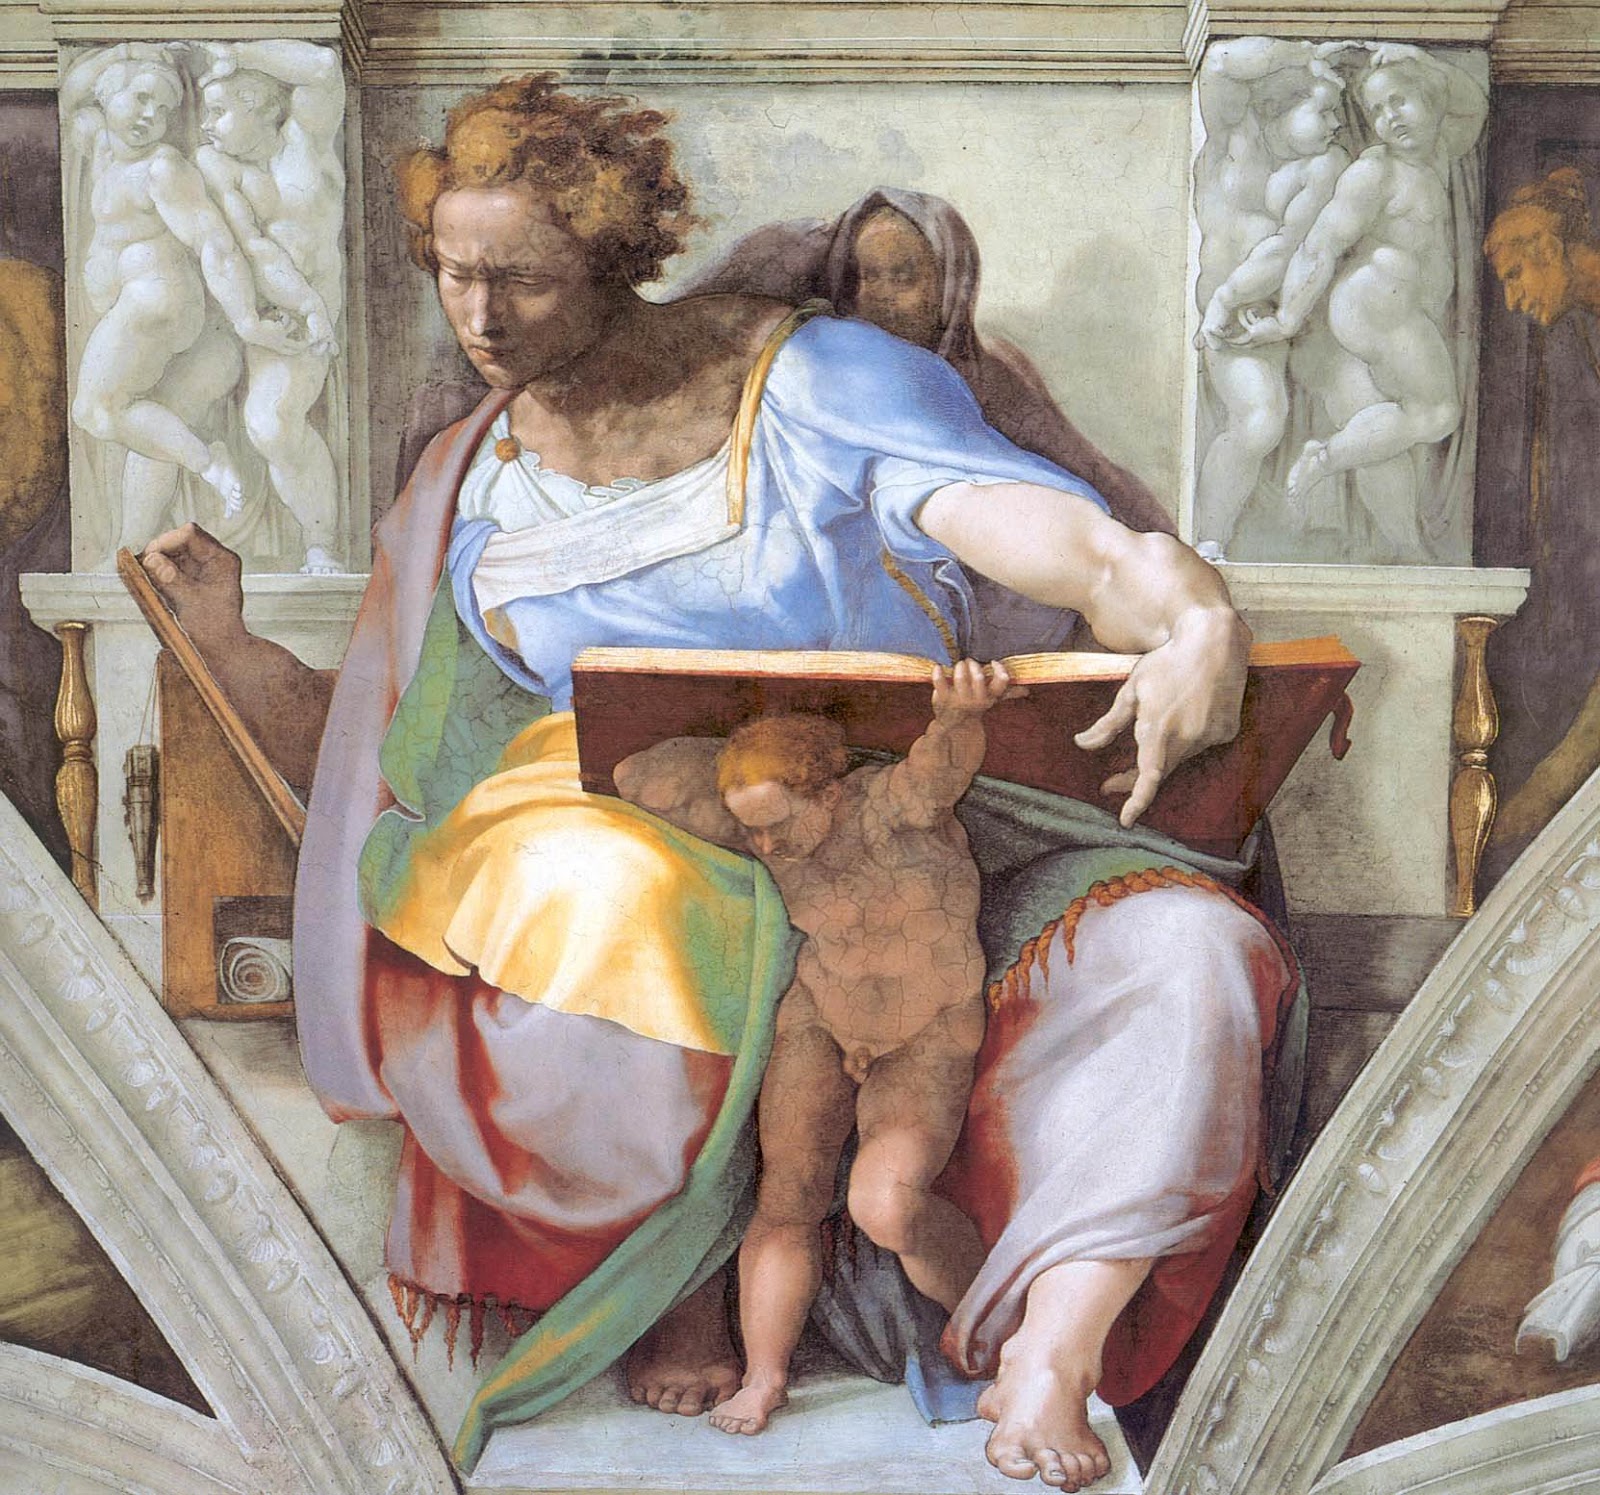 Michelangelo+Buonarroti-1475-1564 (305).jpg